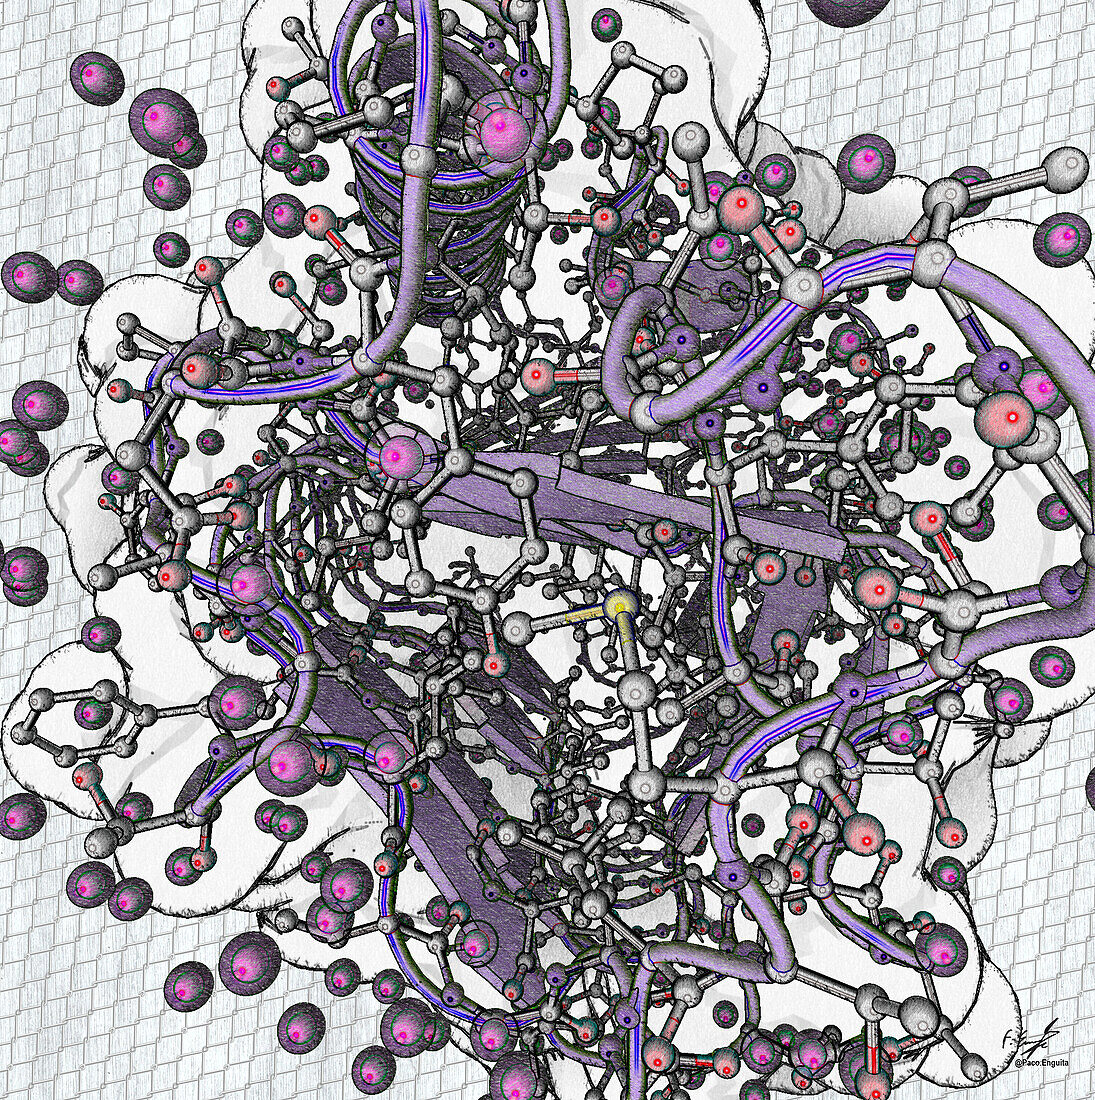 Fungal antifreeze protein, illustration